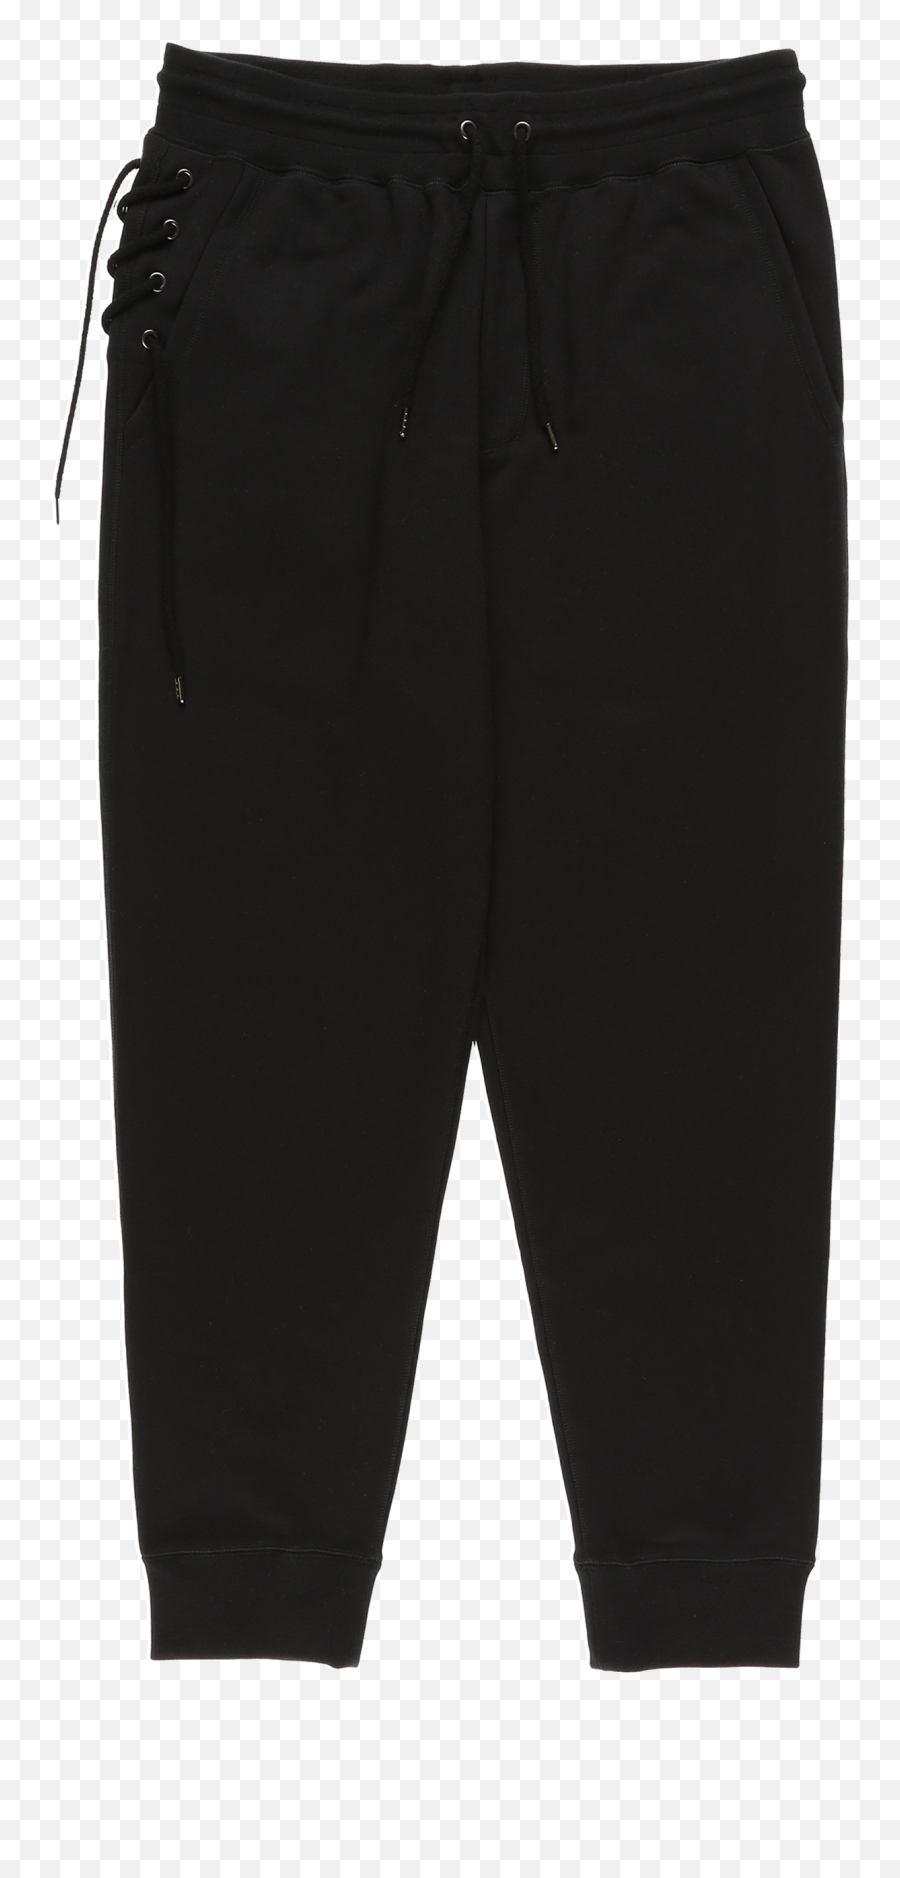 Craig Green Laced Track Pants - Sweatpants Emoji,Emotion Anine